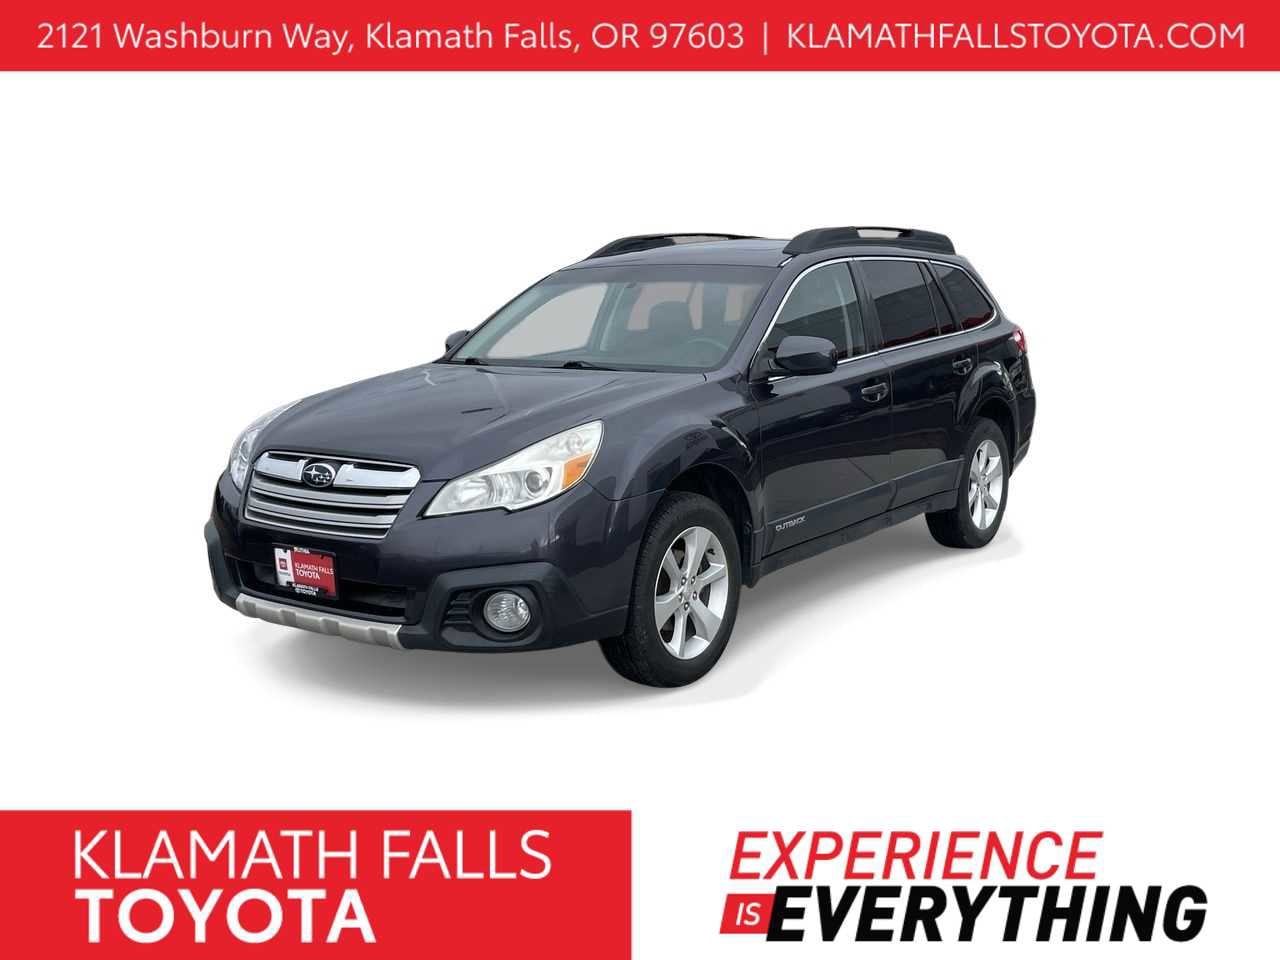 2013 Subaru Outback 2.5i Limited (cvt) -
                Klamath Falls, OR